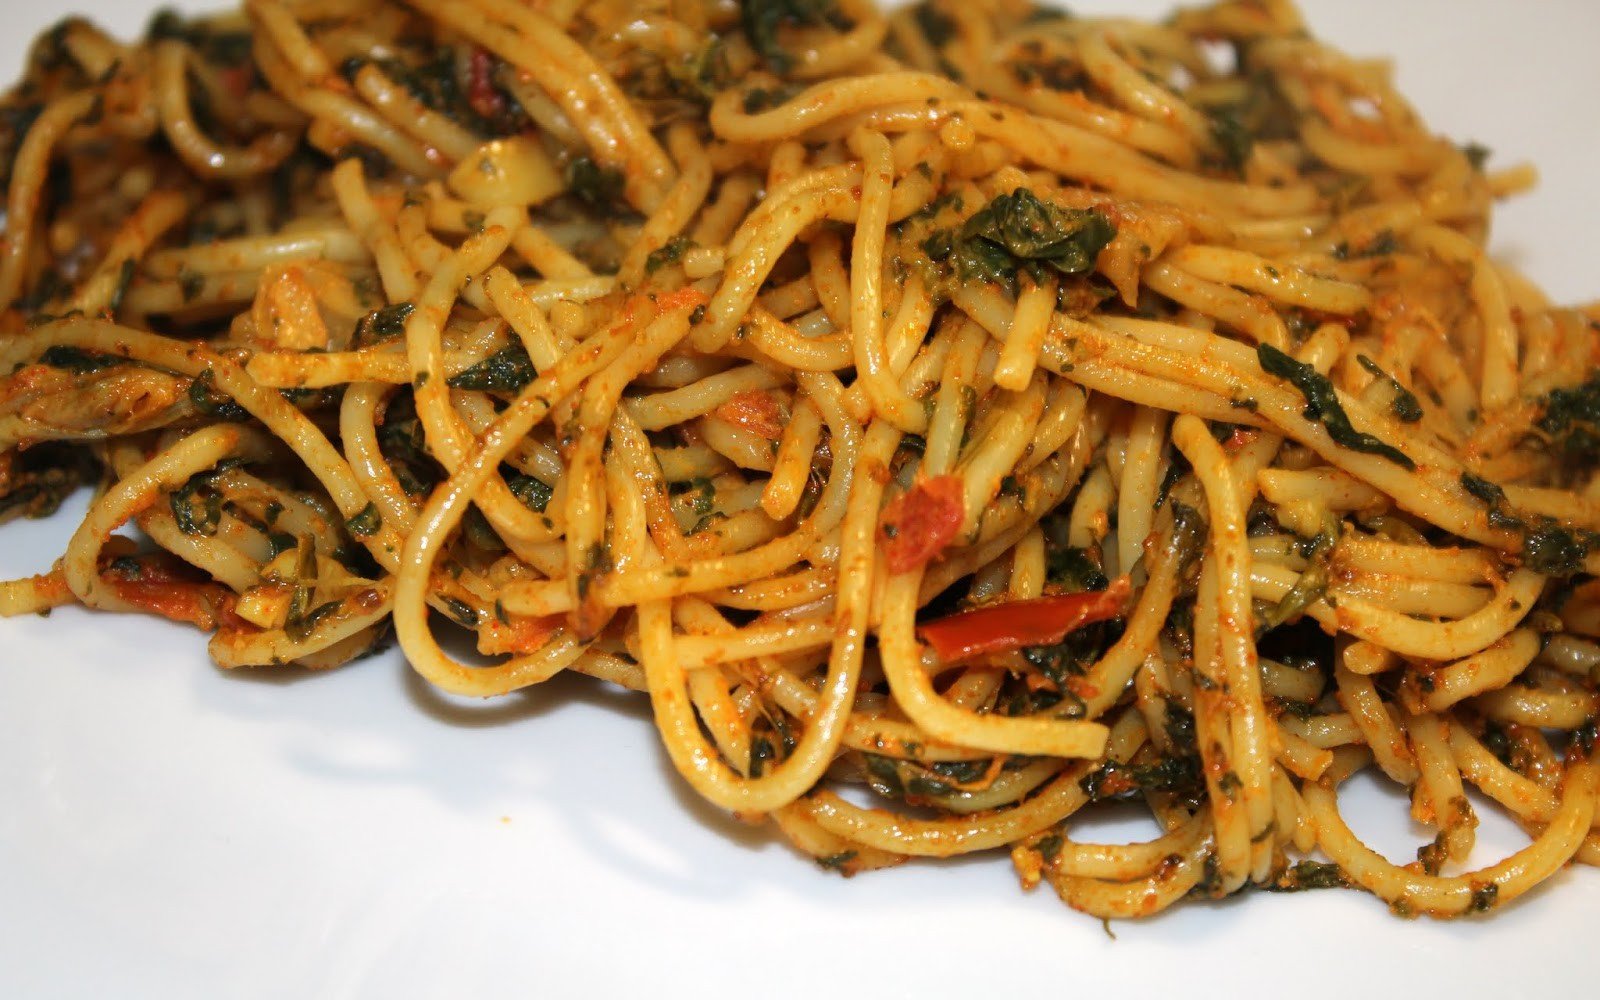 espaguetis espinacs al curri guarnicio datils pas37